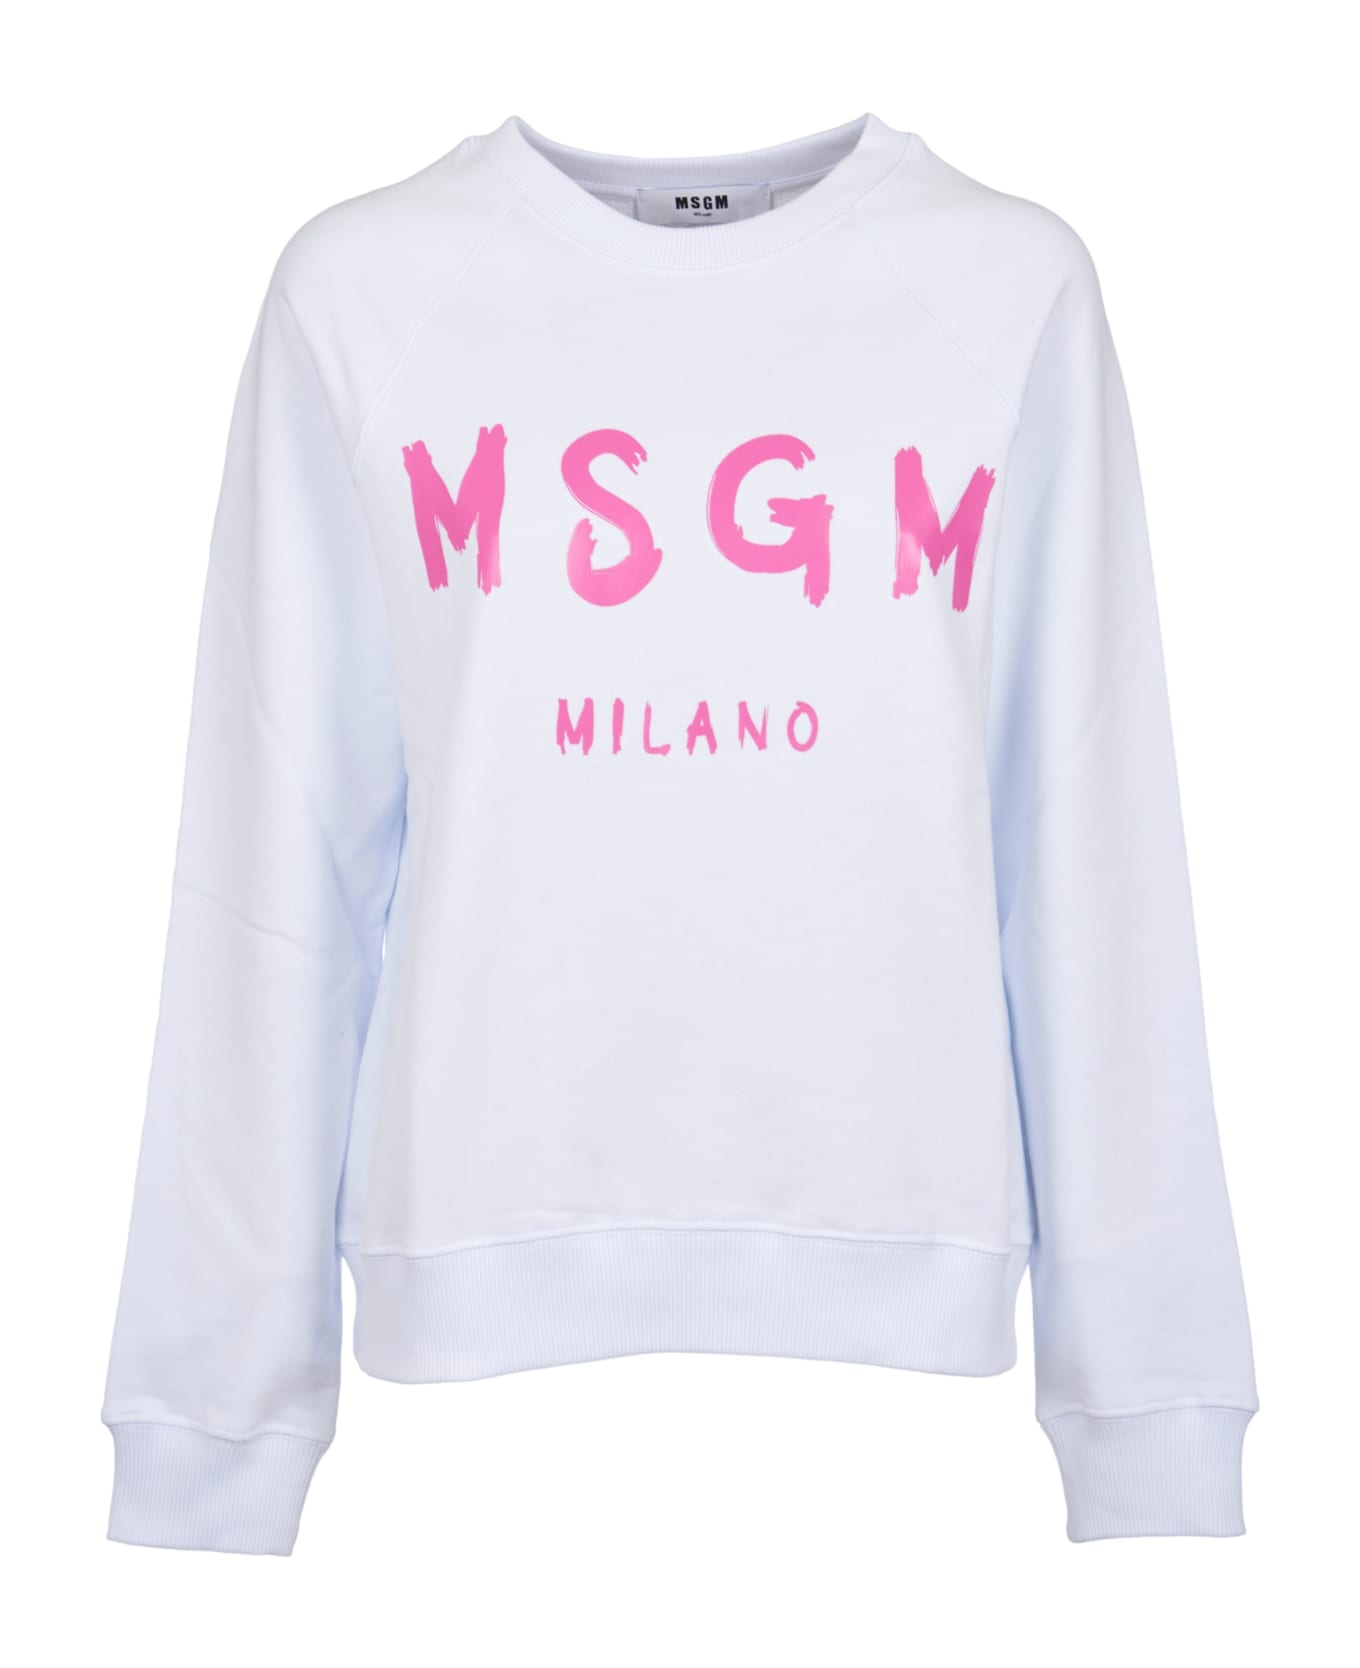 MSGM Milano Sweatshirt - Optical White